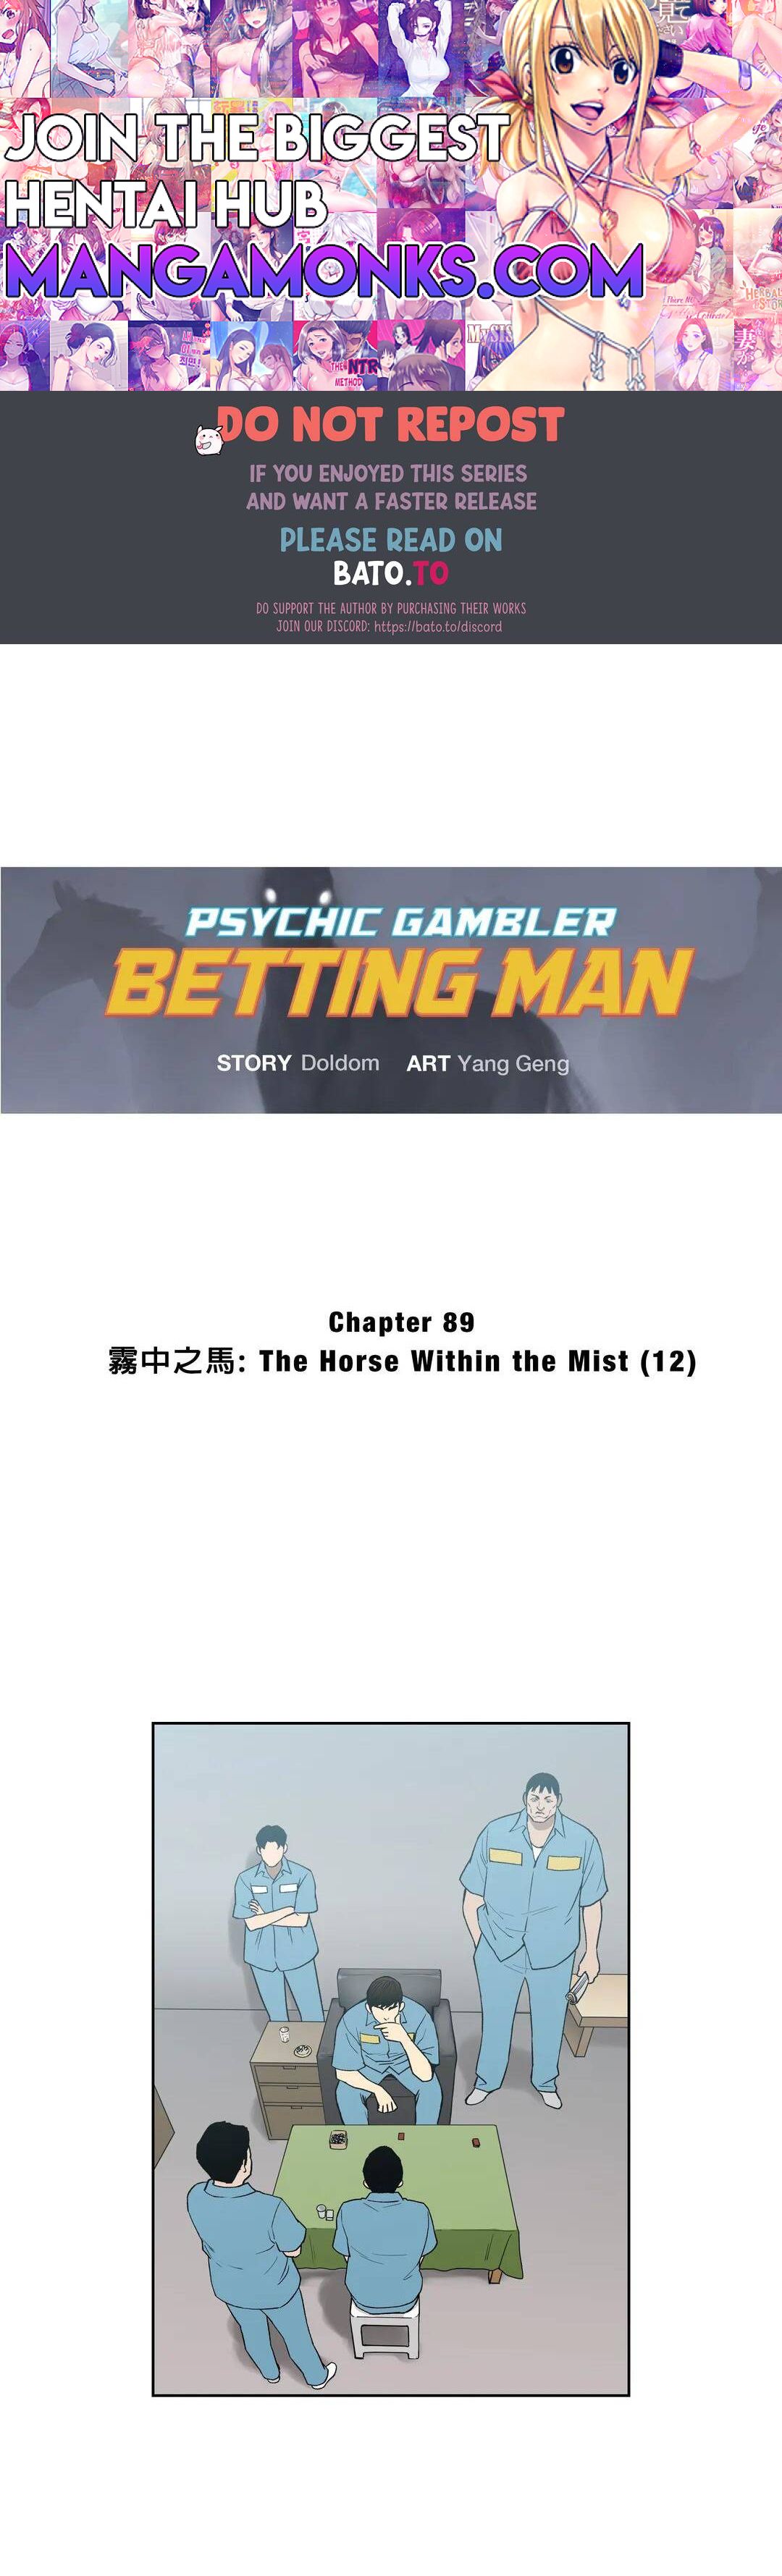 Psychic Gambler: Betting Man Chapter 89